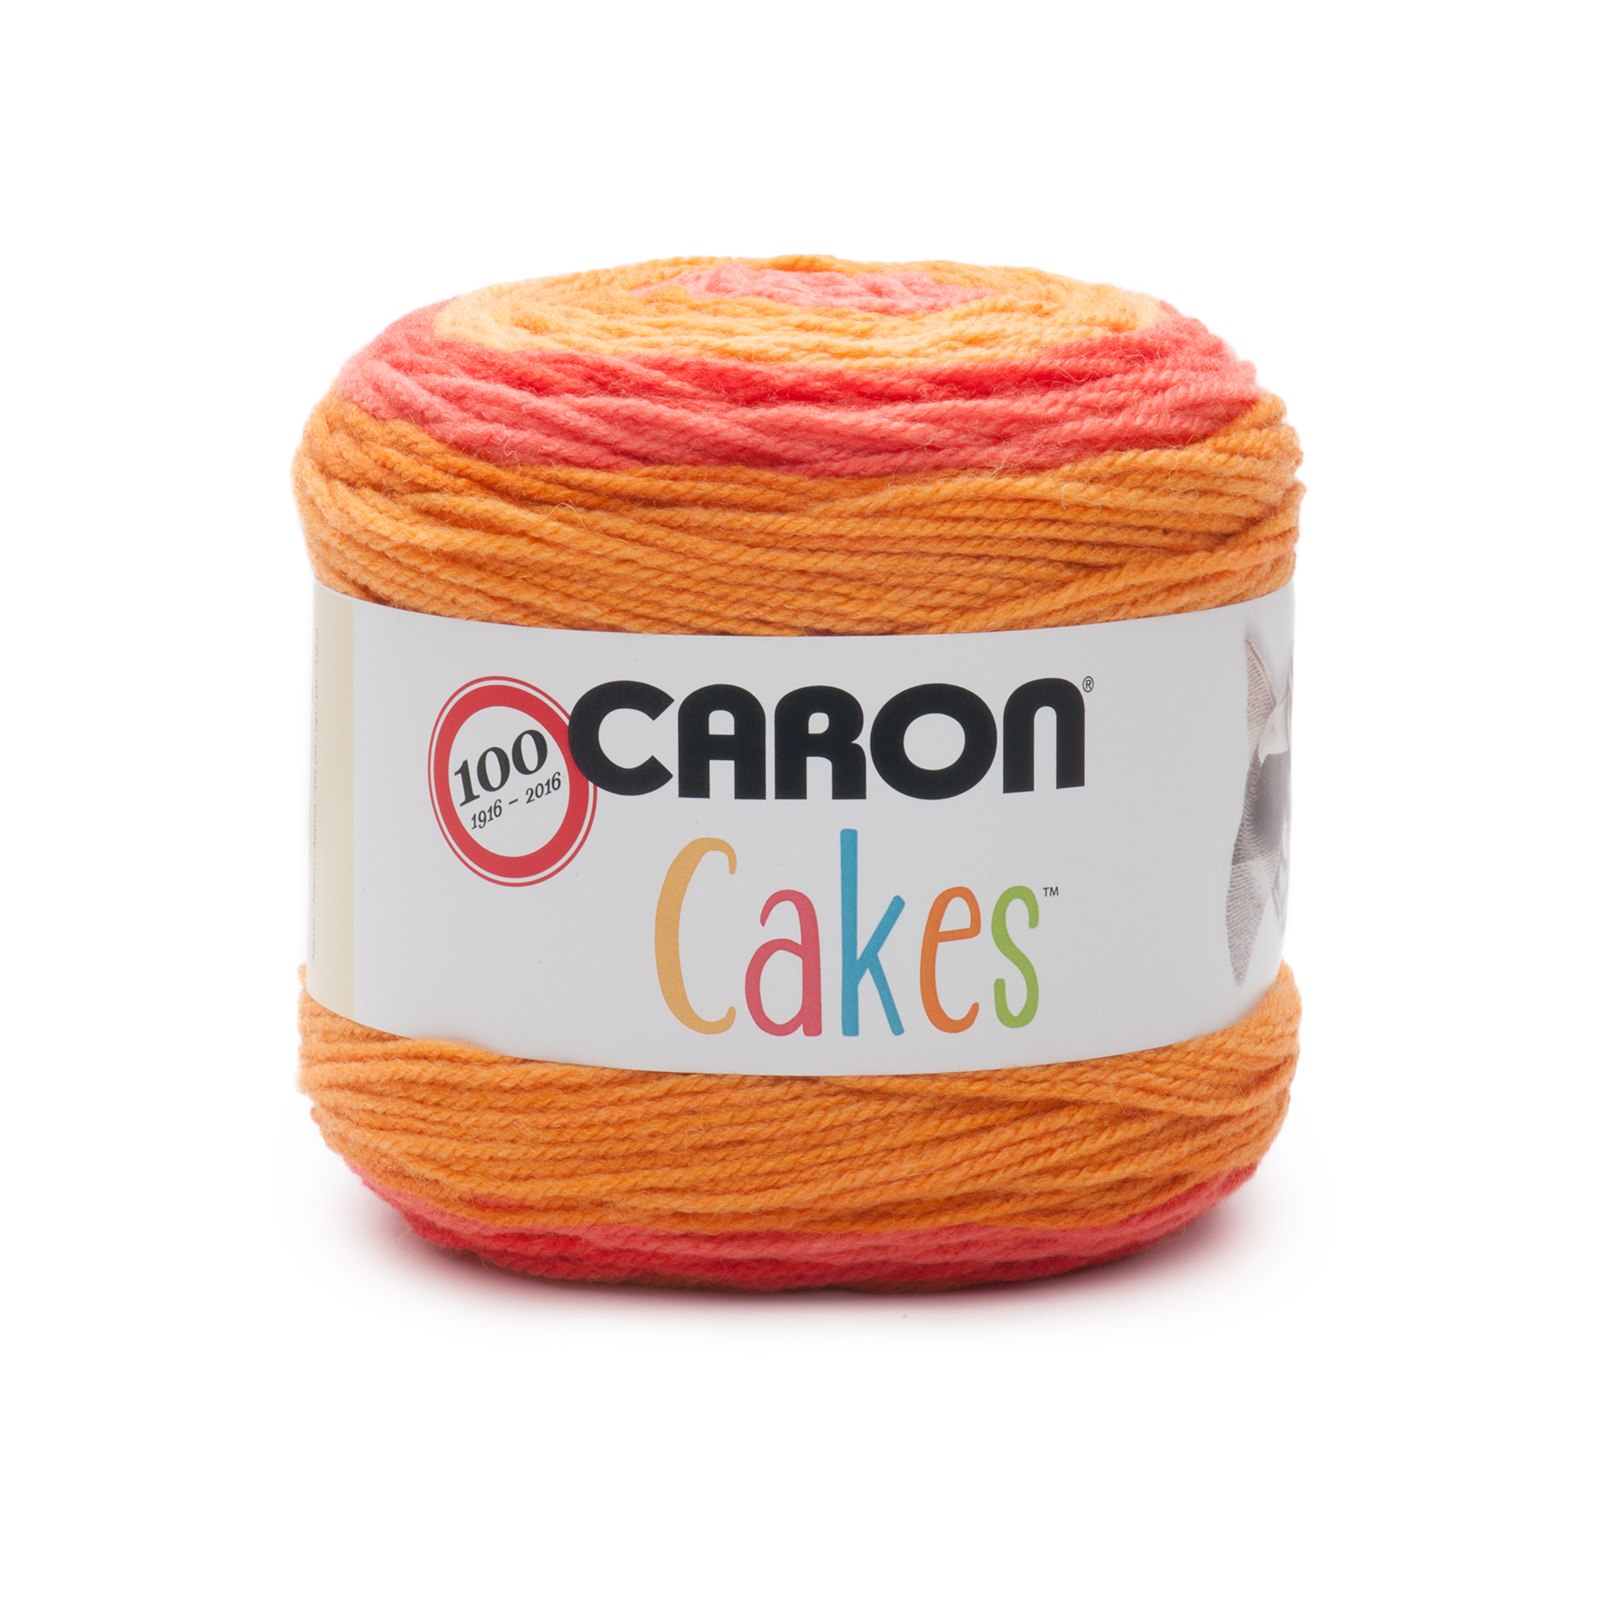 Caron Cakes Yarn, Spice Cake